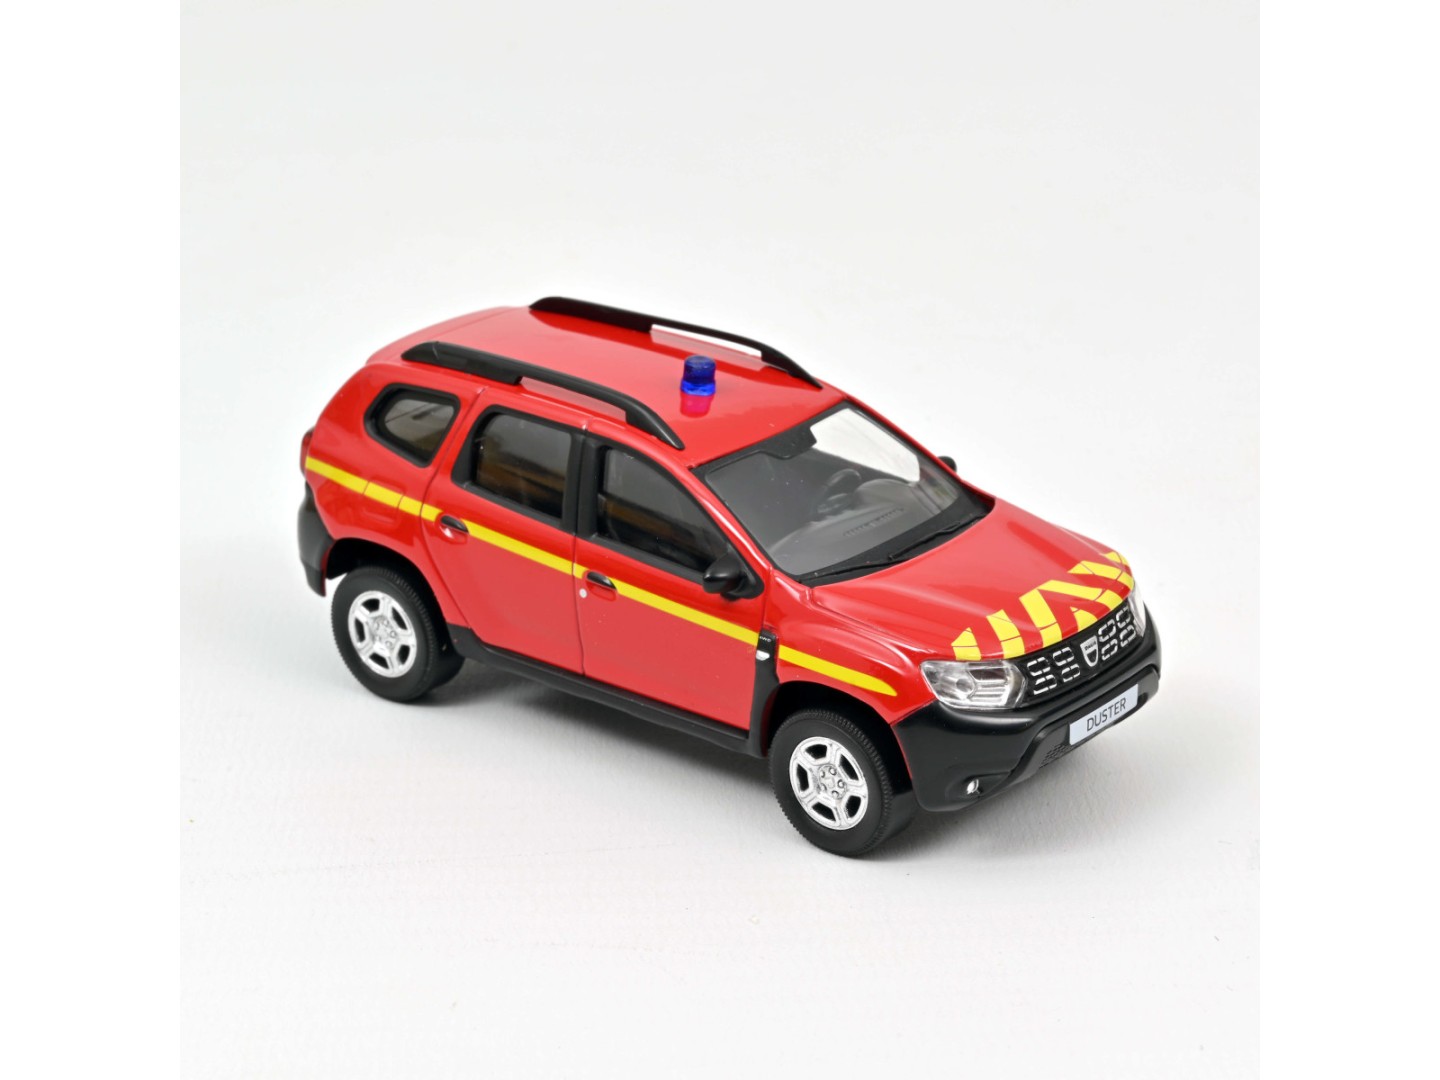 Marketplace - Dacia Duster 2020 Pompiers - Norev - 1:43